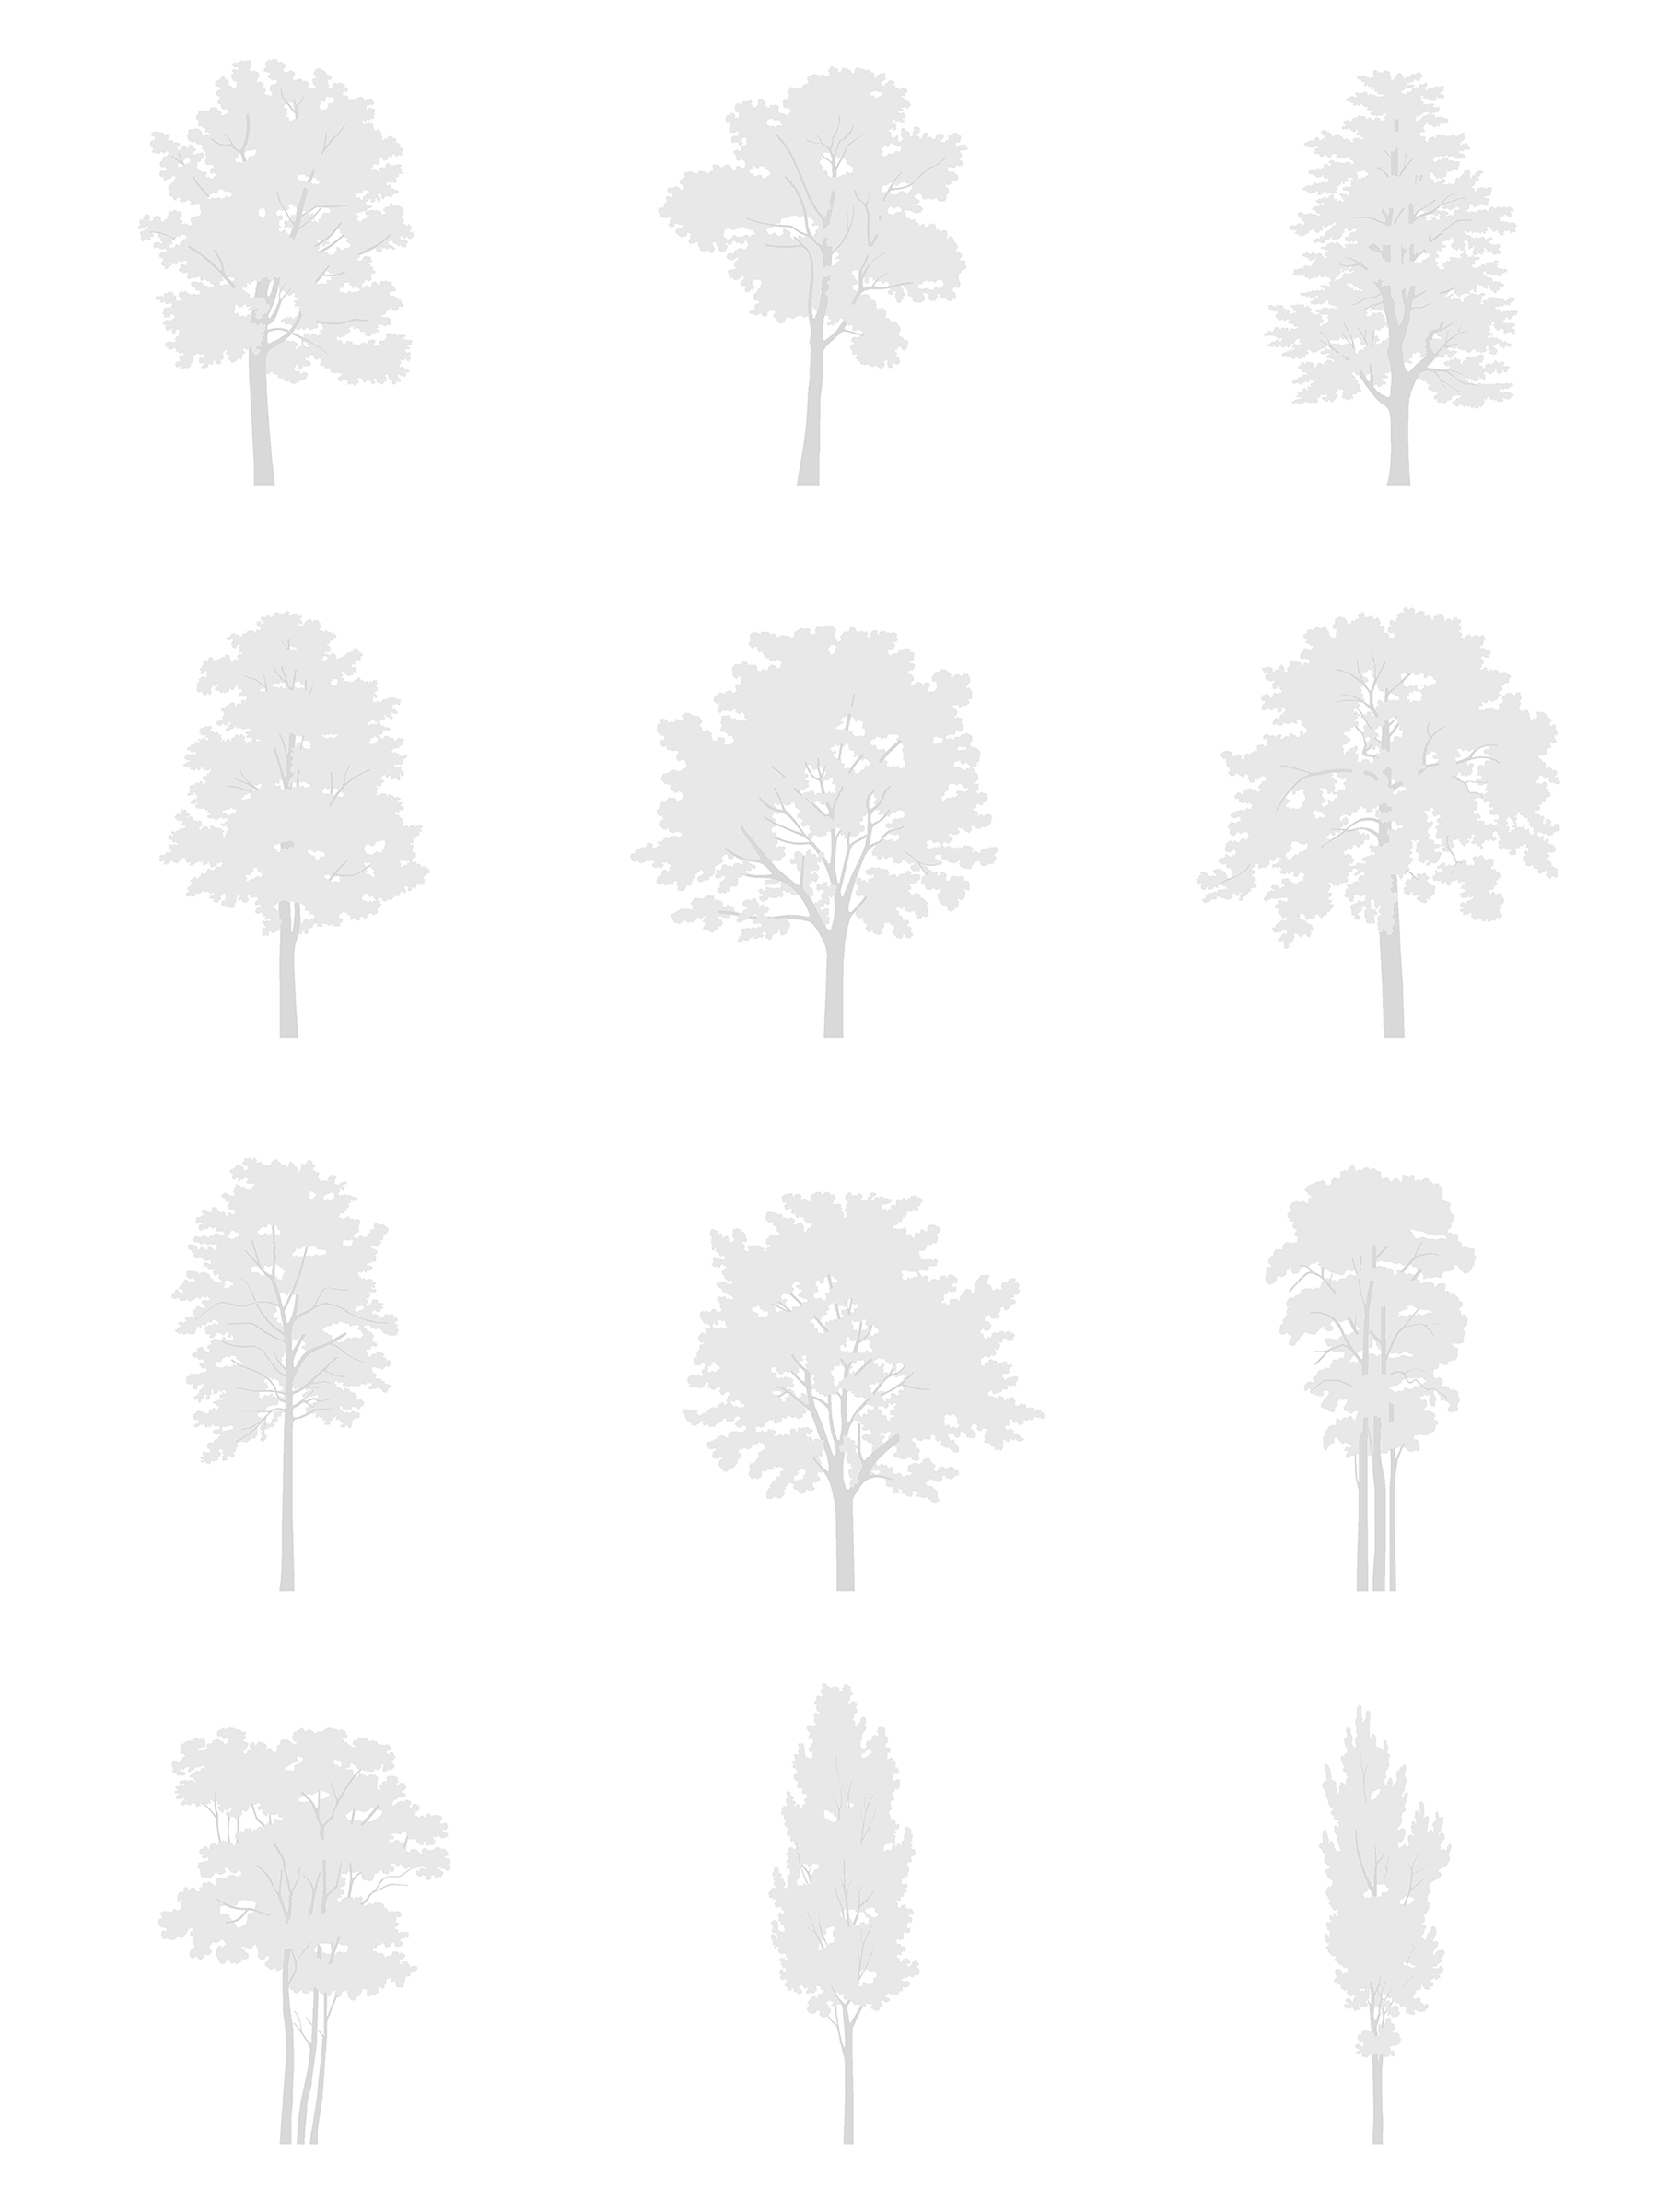 I.II. DWG Vectorial Trees -  Medium Trees Pack - cutout trees